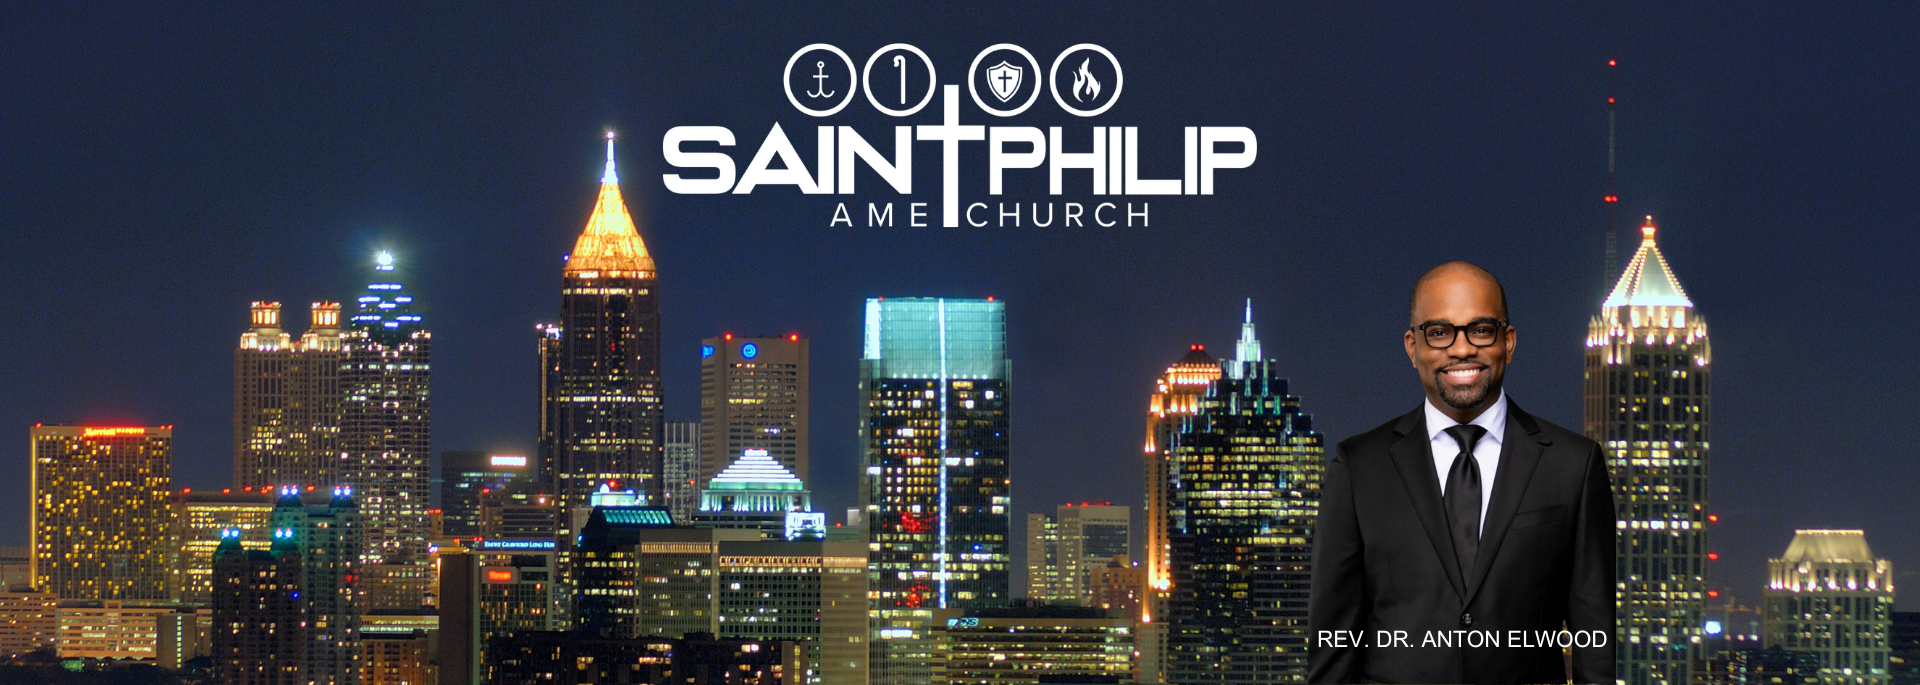 Saint Philip AME